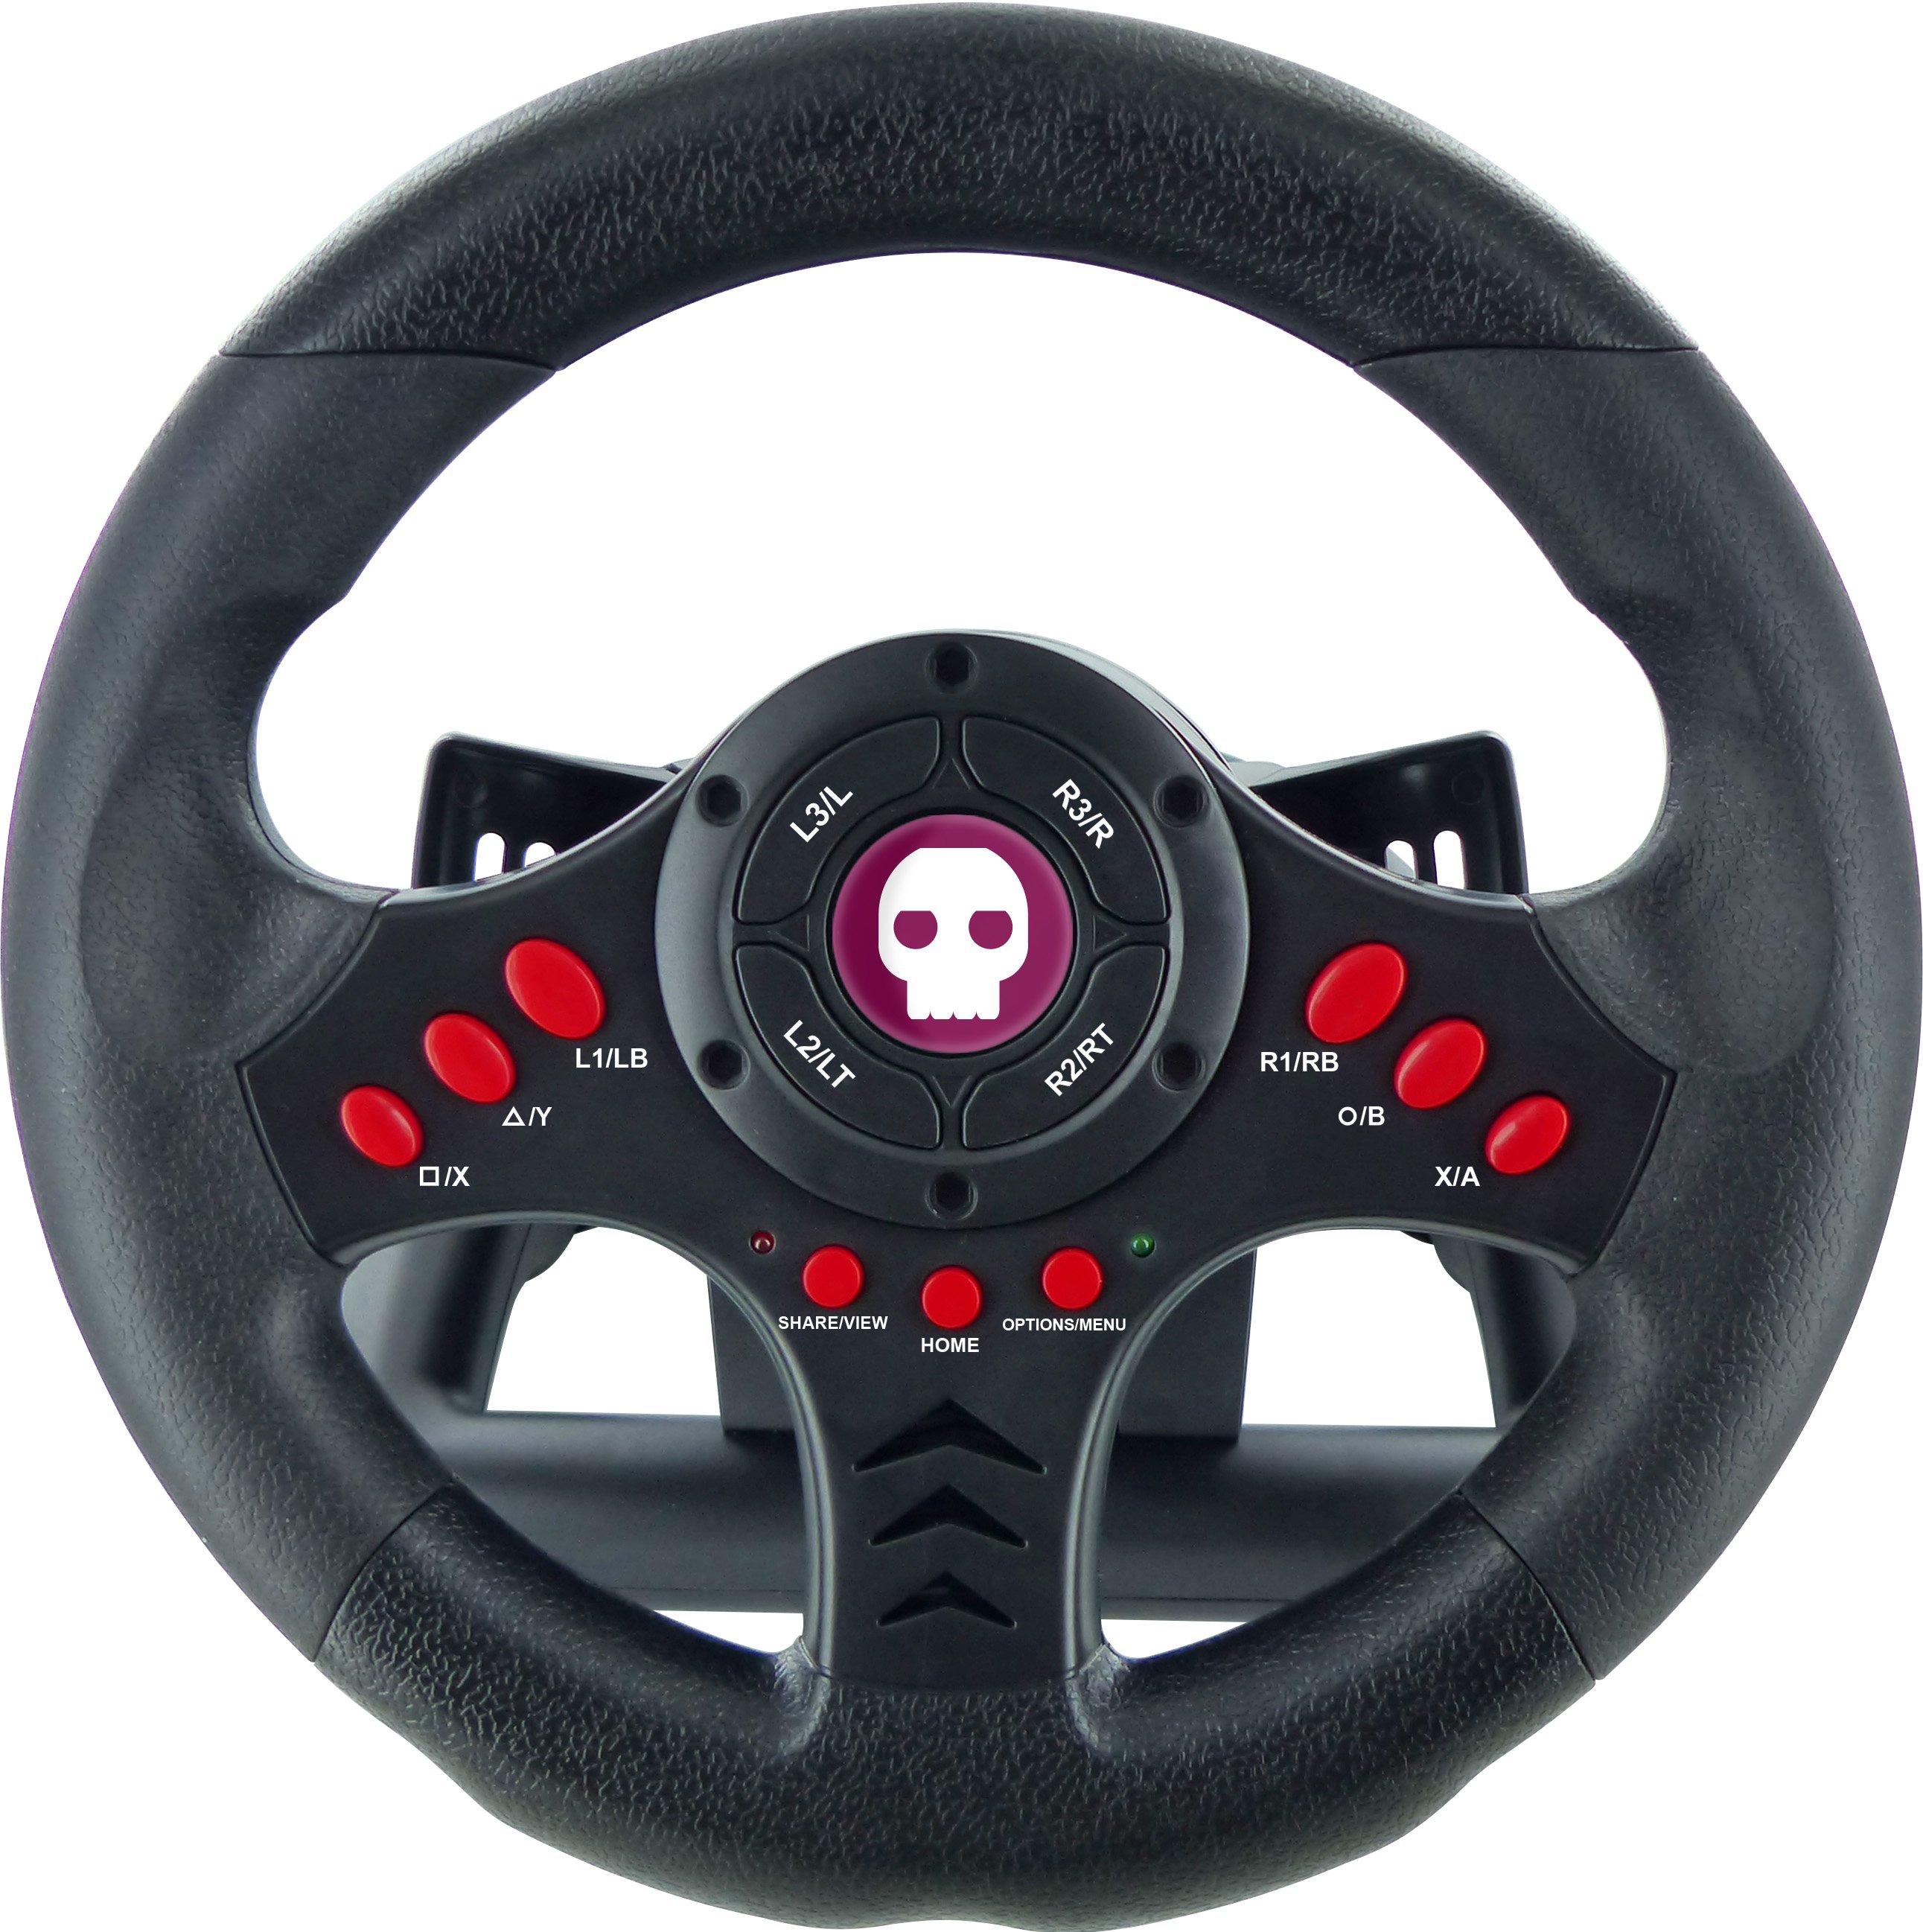 list item 3 of 5 Multi-Format Steering Wheel and Pedals GameStop Exclusive